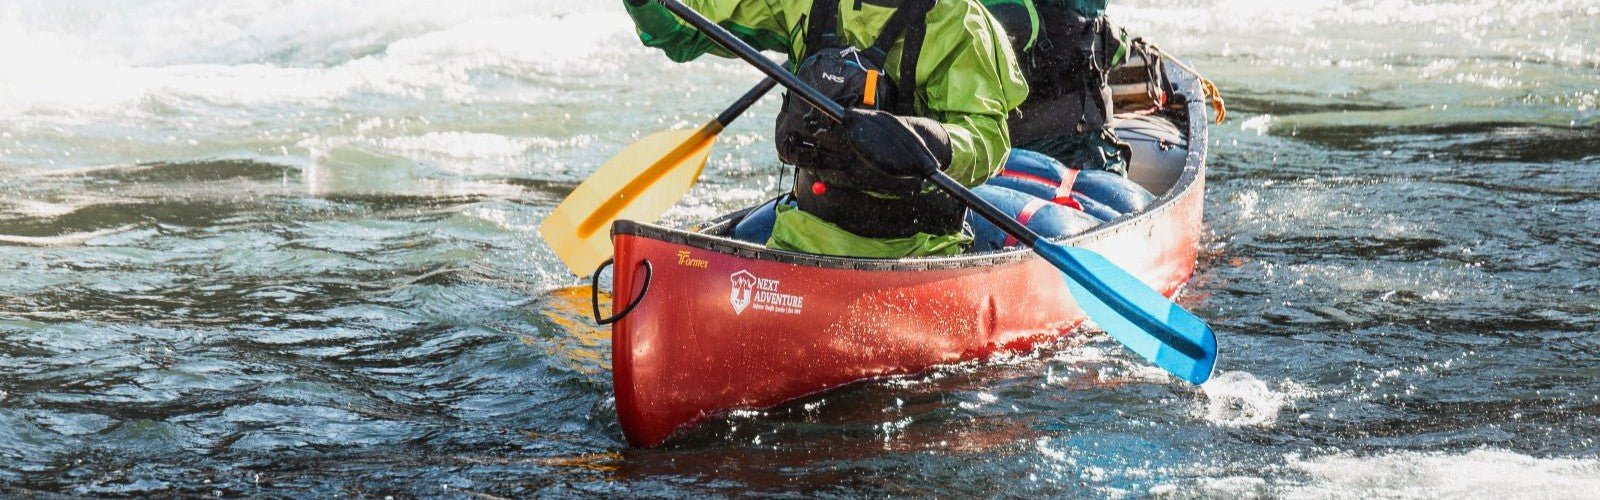 Review of the Esquif Prospector 15 Canoe - Next Adventure